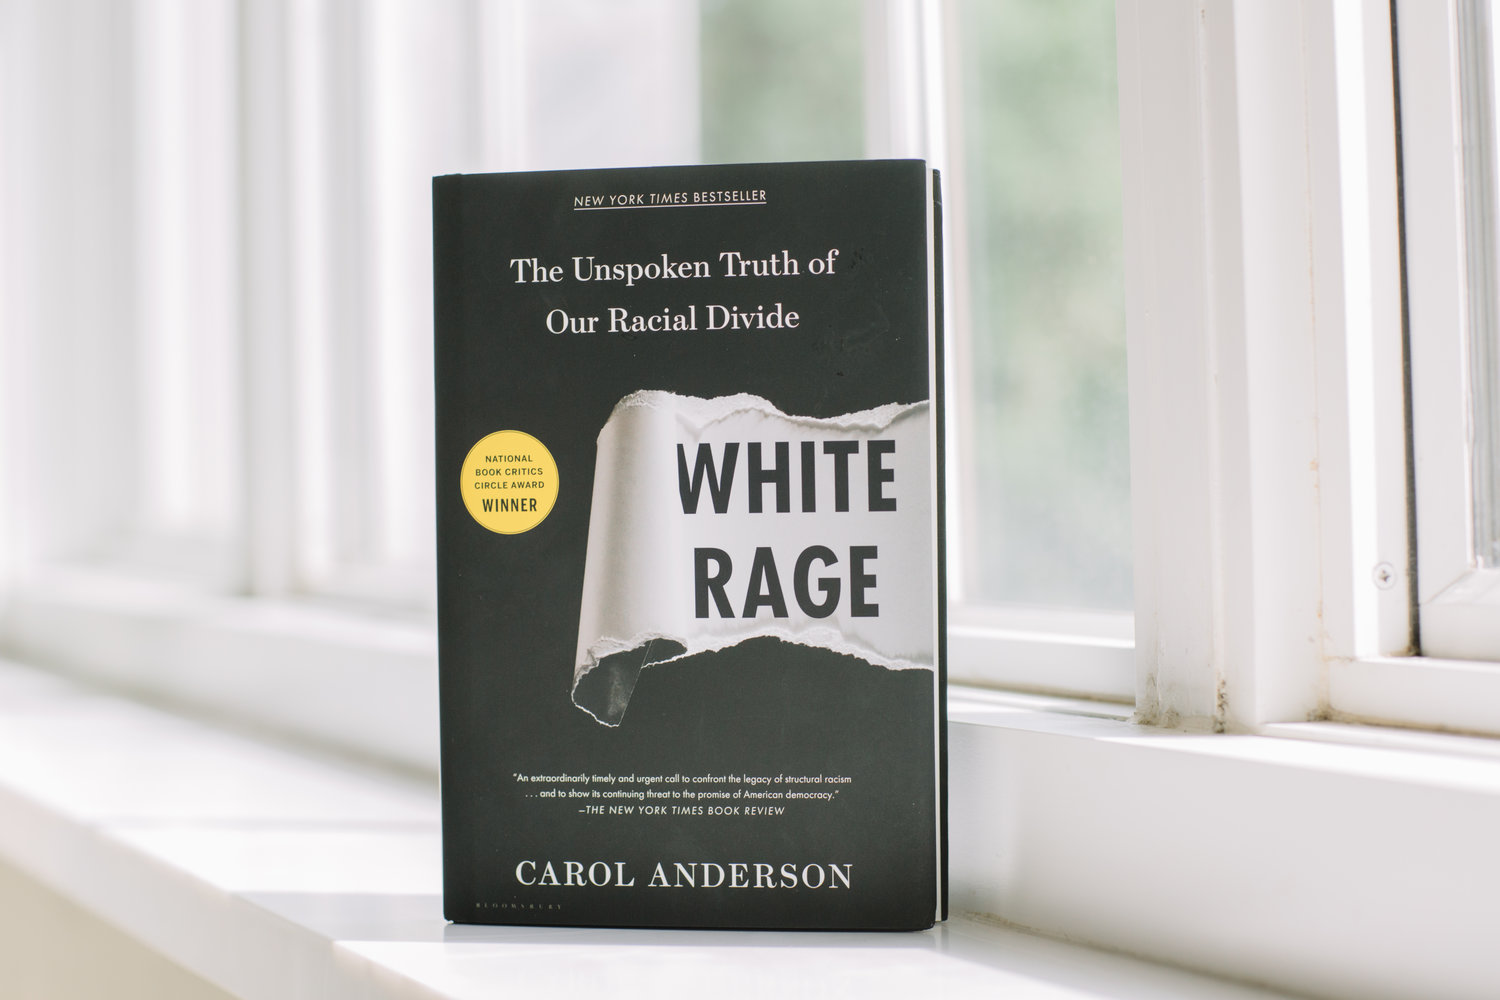 White Rage book on window ledge